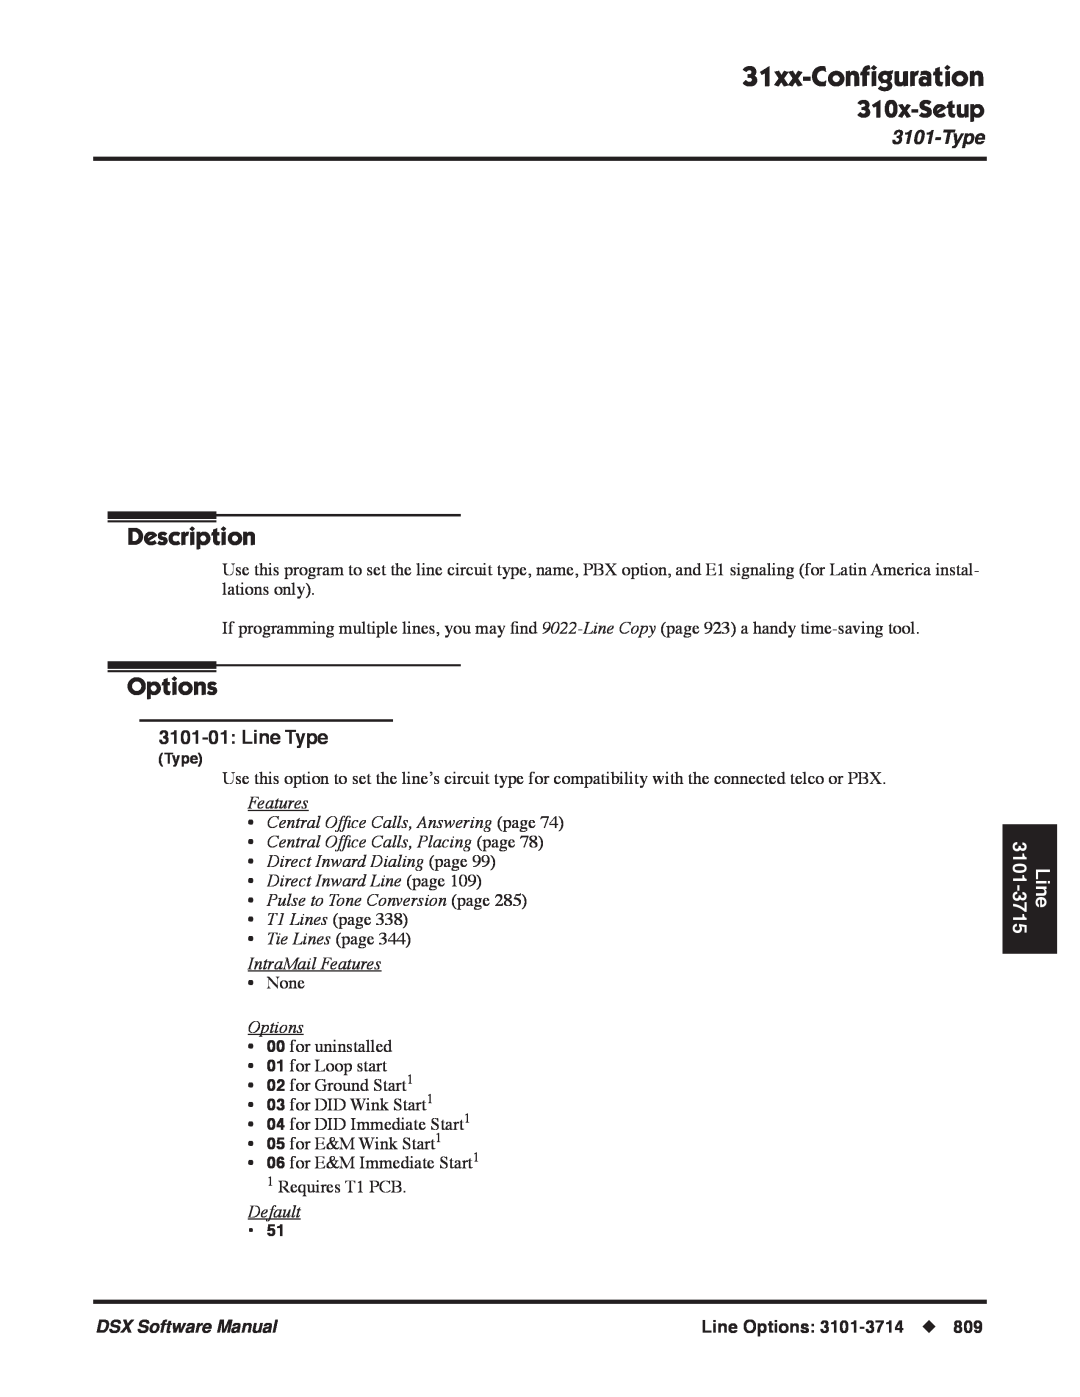 NEC P Lines, 31xx-Conﬁguration, 310x-Setup, Description, Options, 3101-01:Line Type, •Direct Inward Dialing page 